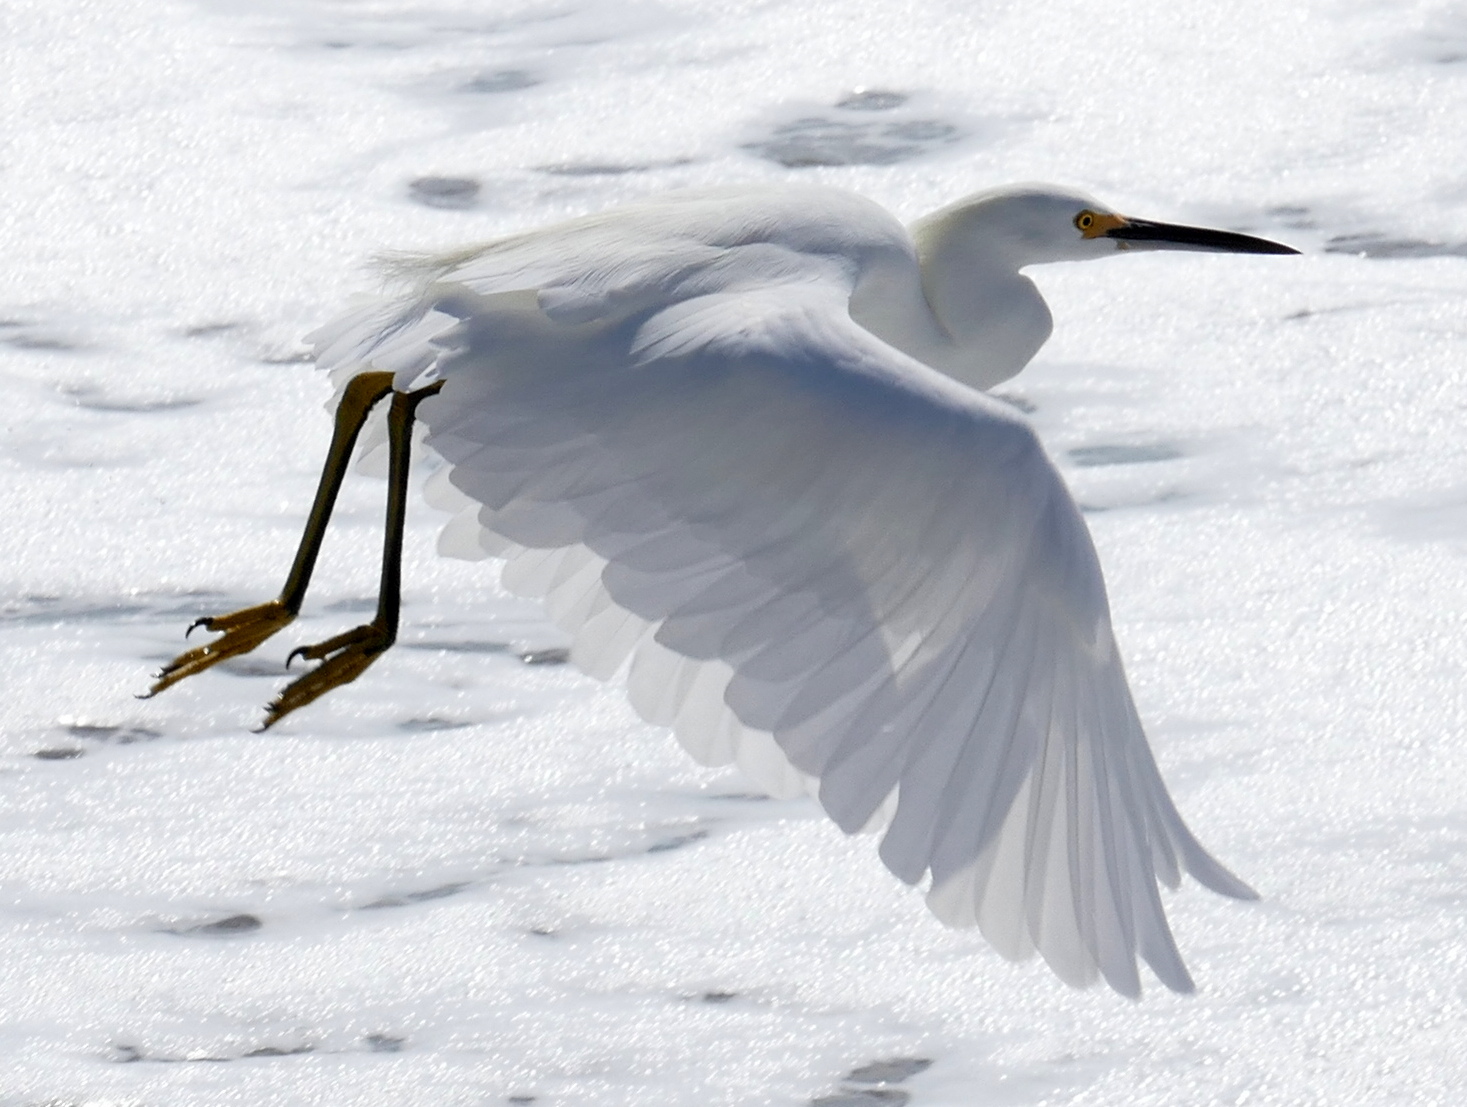 an egret flies over foamy water